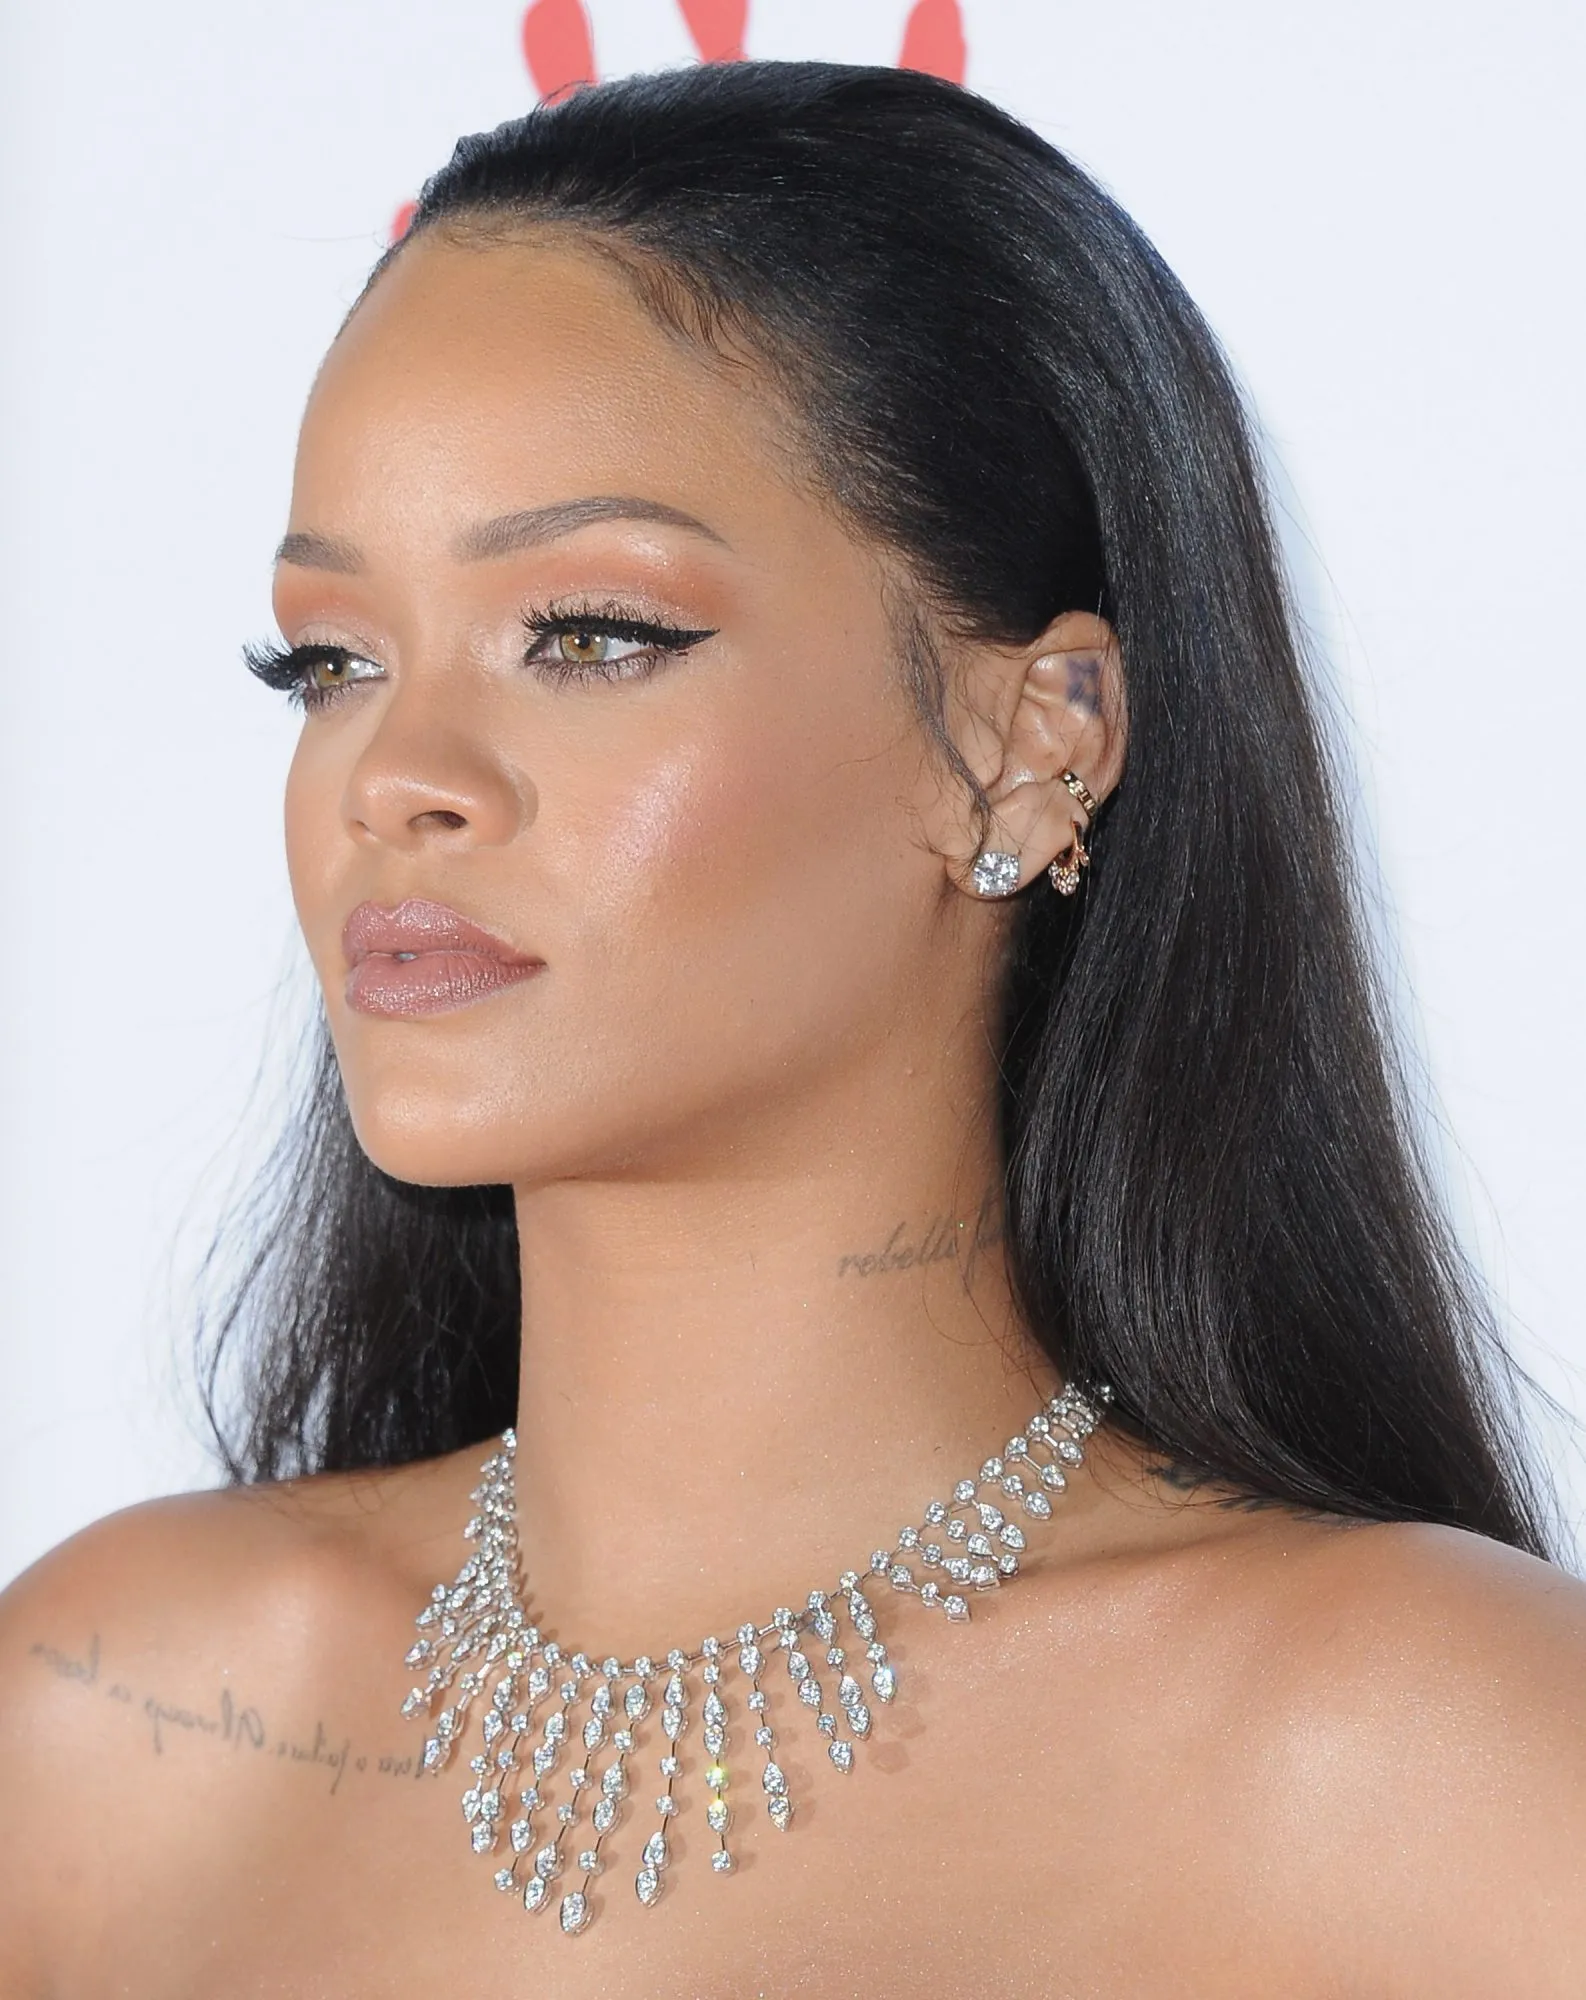 Rihanna conch piercing